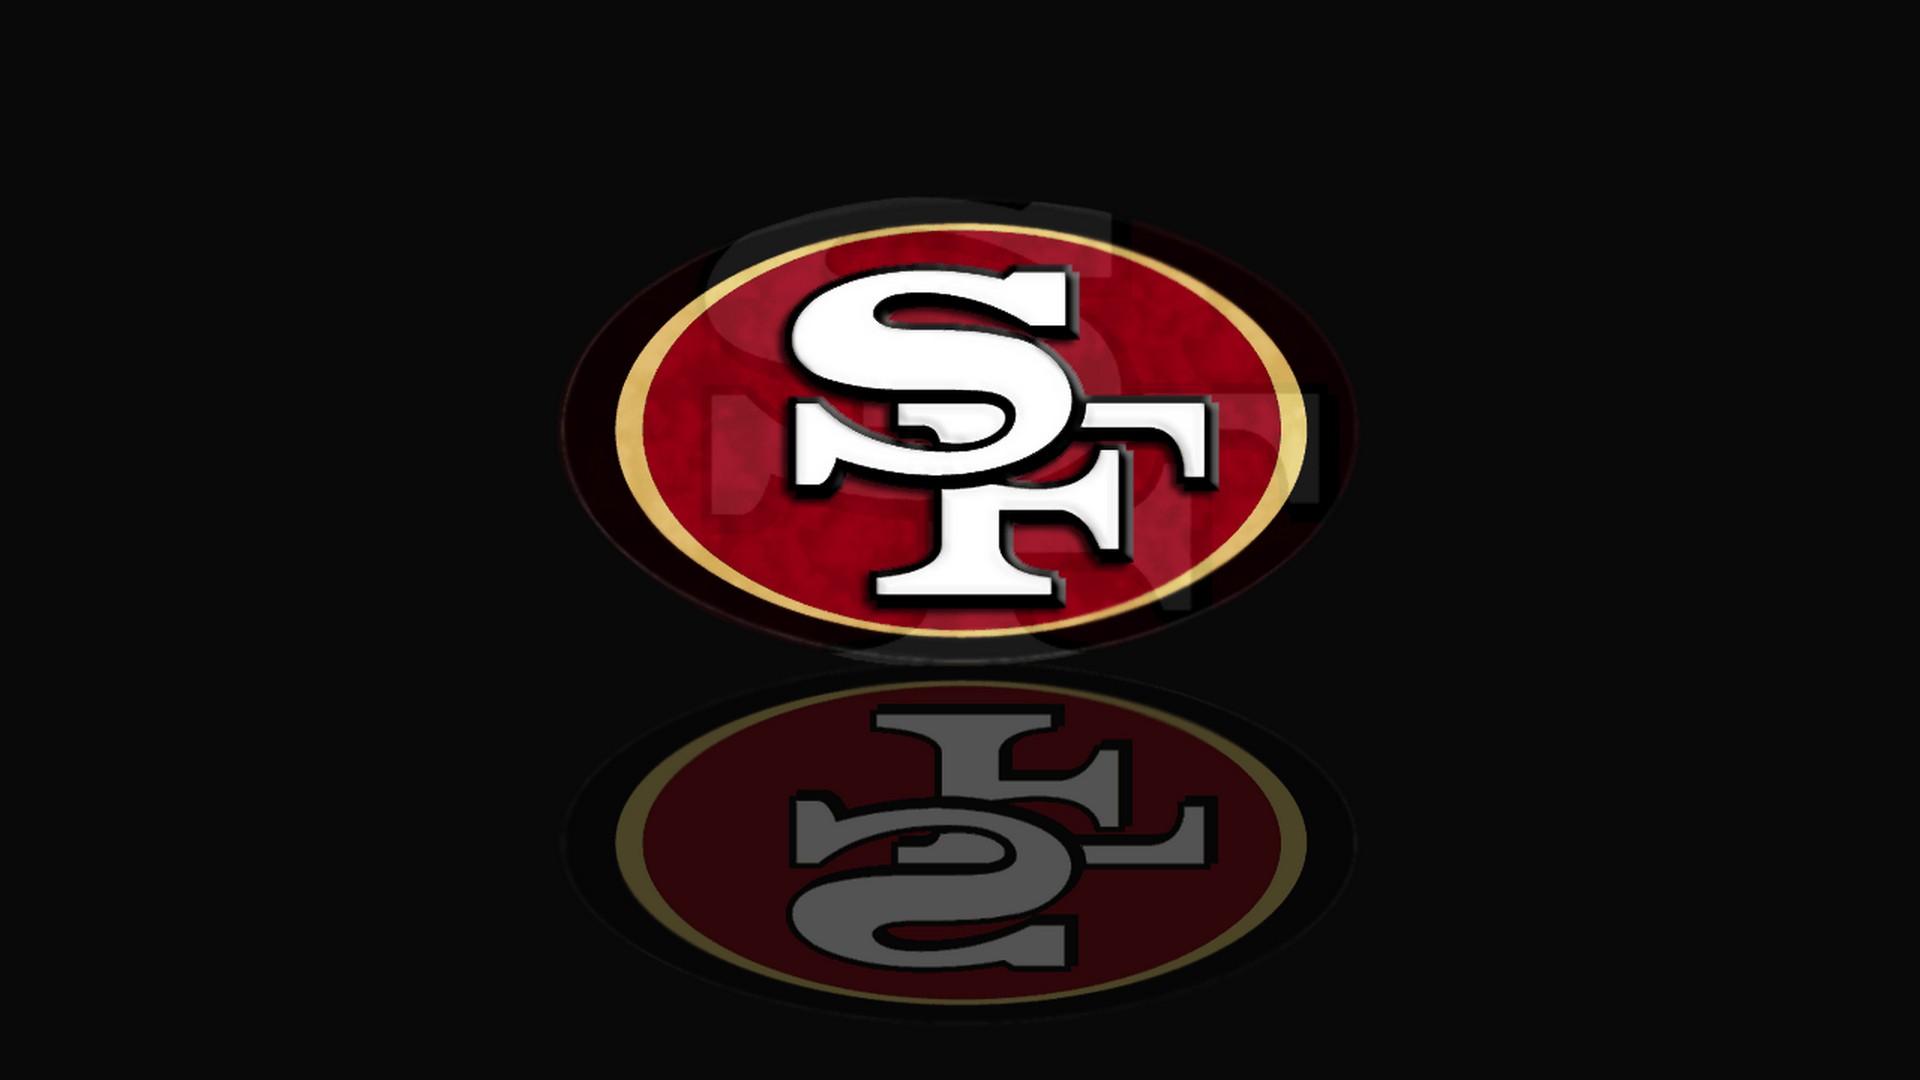 Free download Wallpaper HD San Francisco 49ers 2019 NFL Football